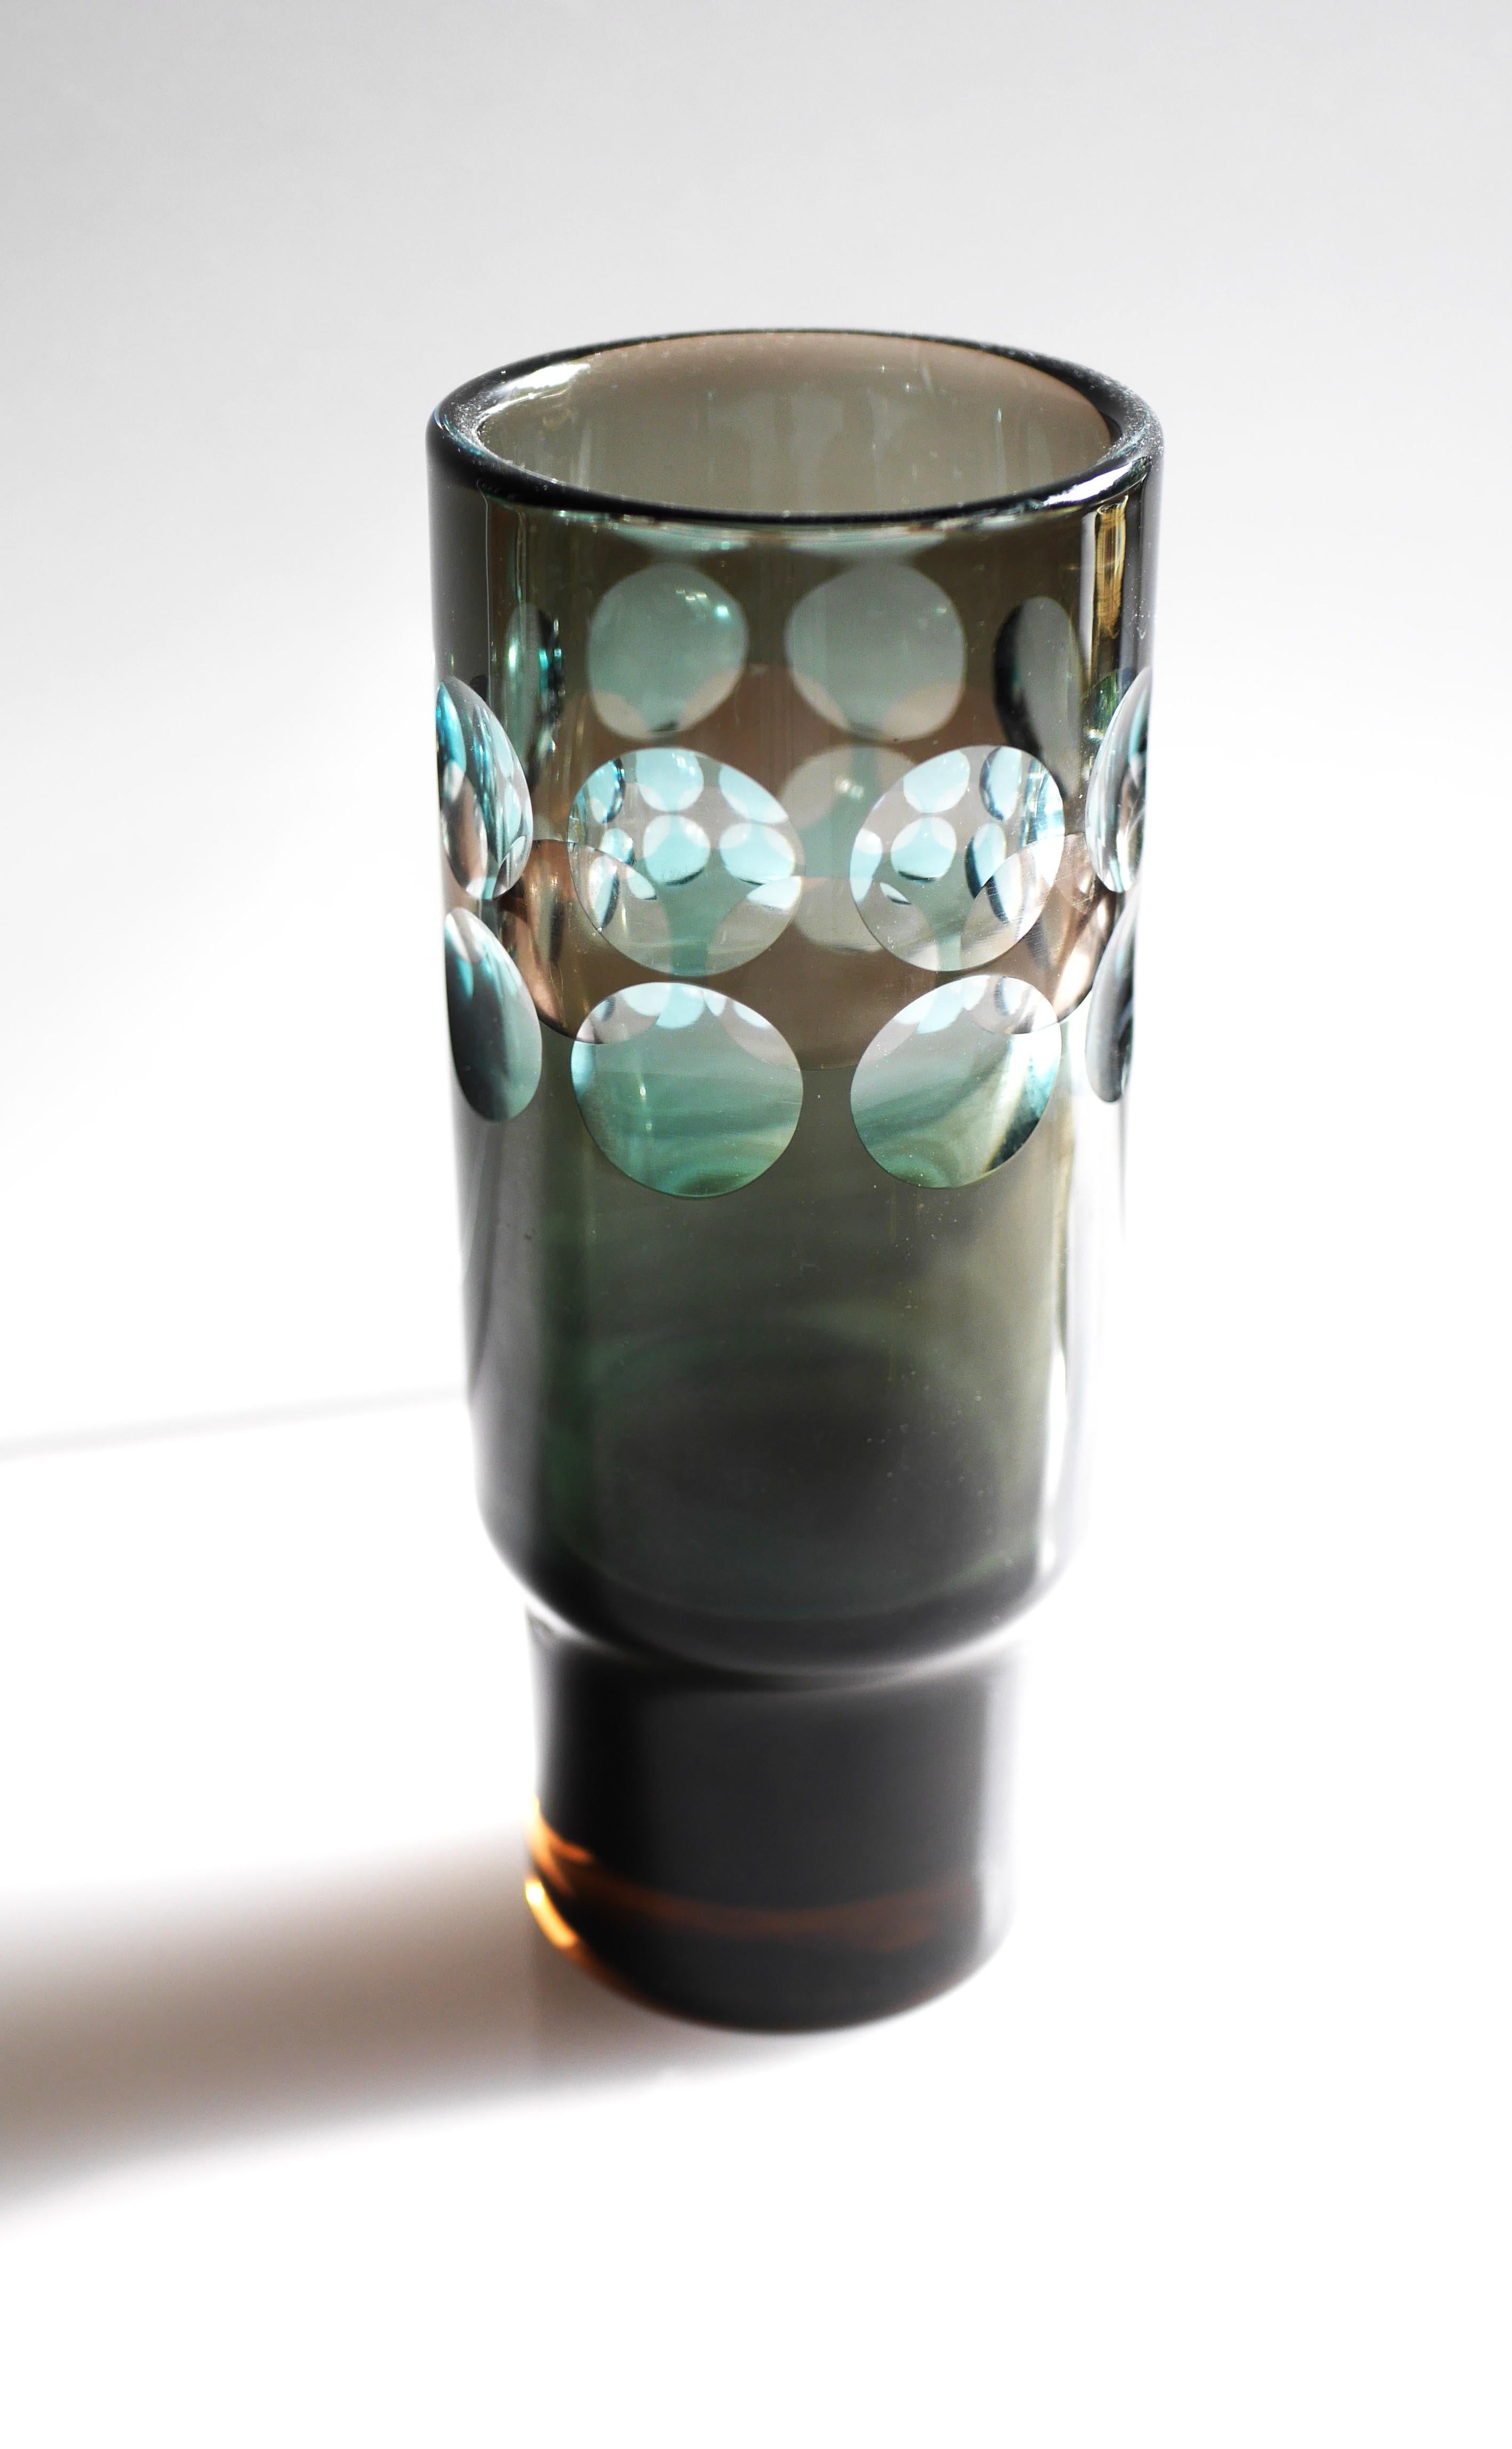 Mid-Century Modern Crystal glass vase made and signed by Ove Sandberg for Kosta Boda, Sweden